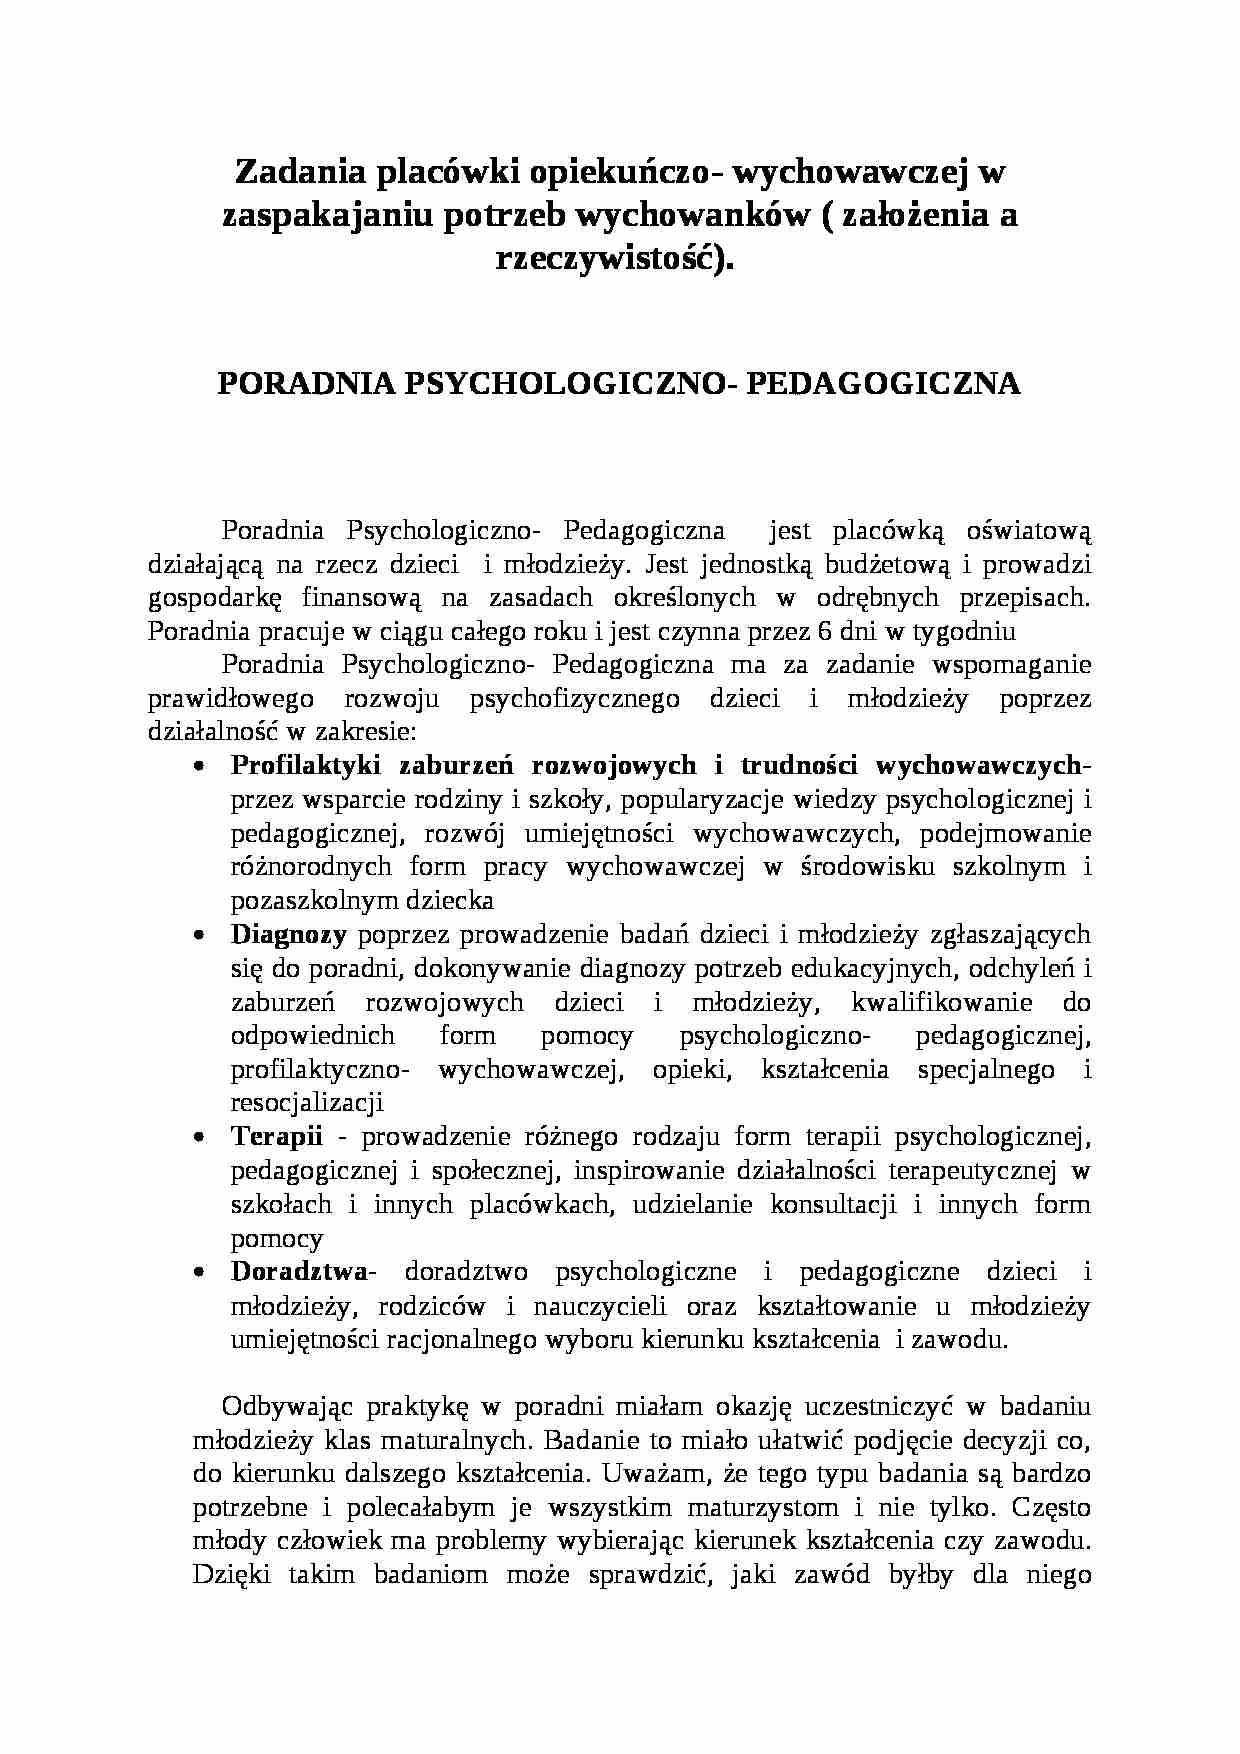 PORADNIA PSYCHOLOGICZNO- PEDAGOGICZNA- pedagogika - strona 1